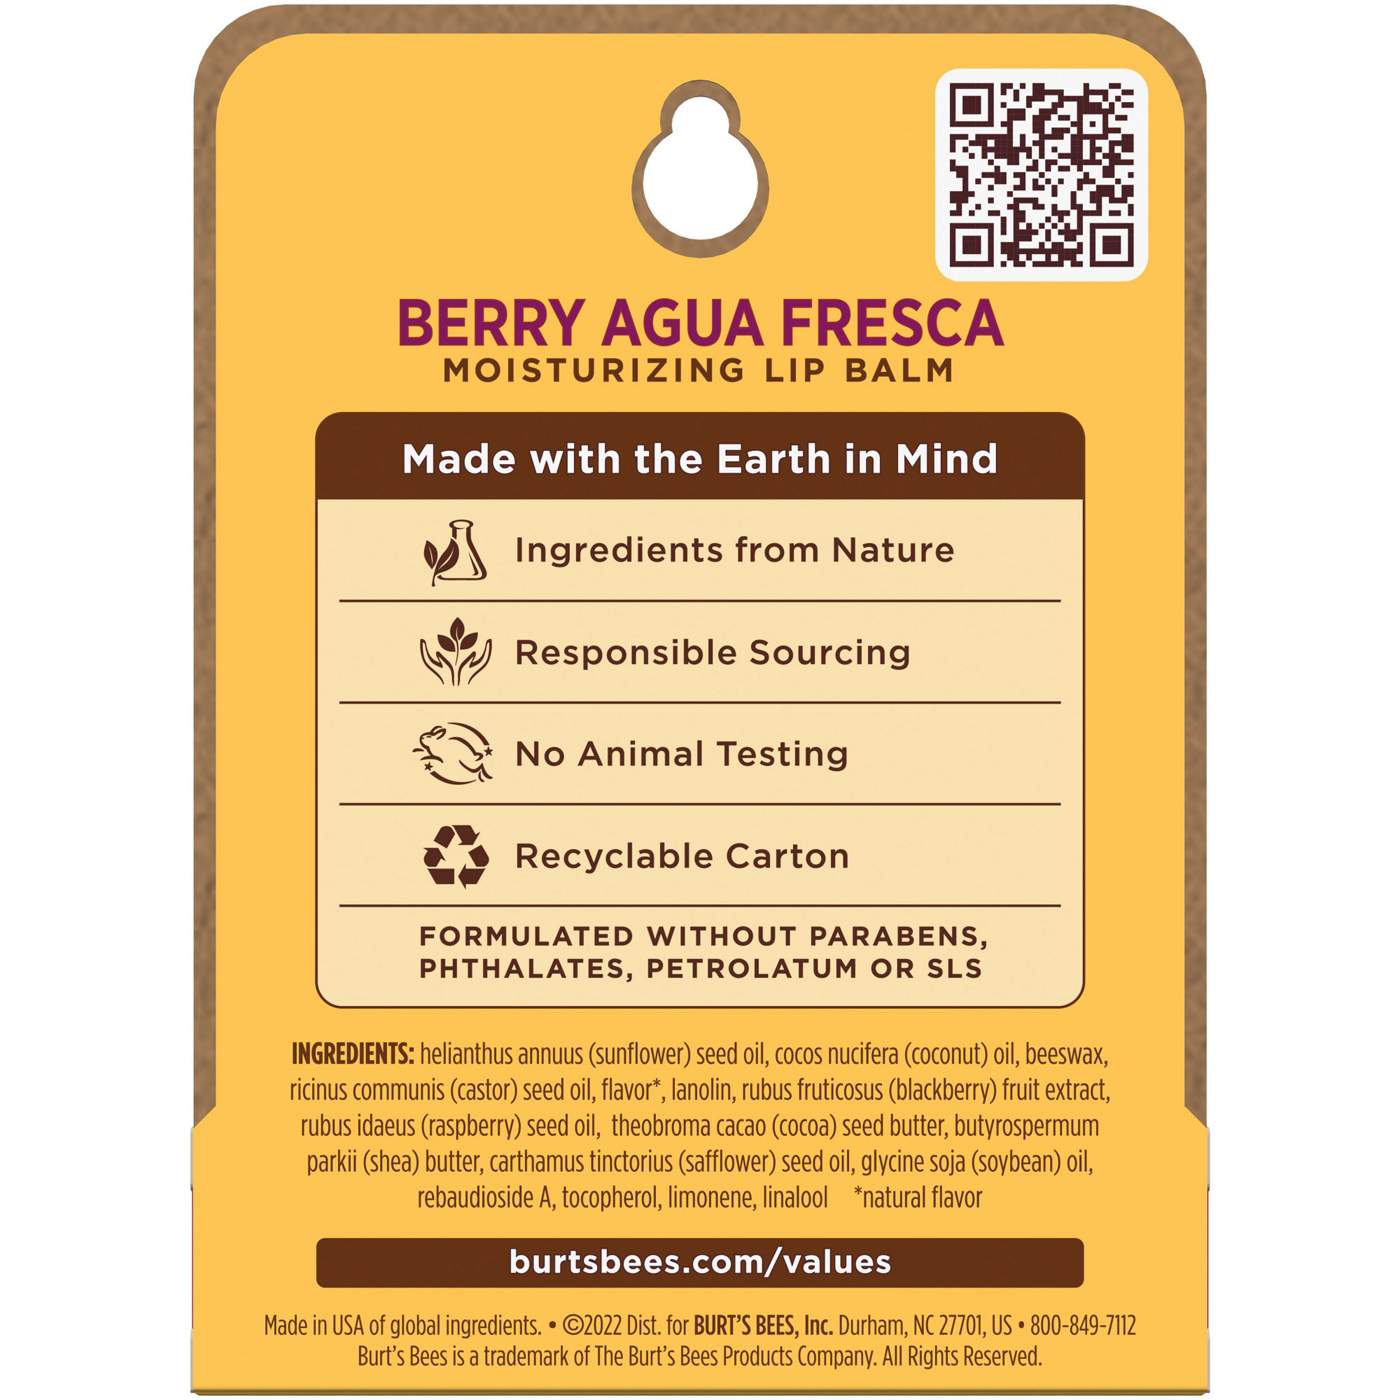 Burt's Bees 100% Natural Origin Moisturizing Lip Balm - Berry Agua Fresca; image 4 of 11